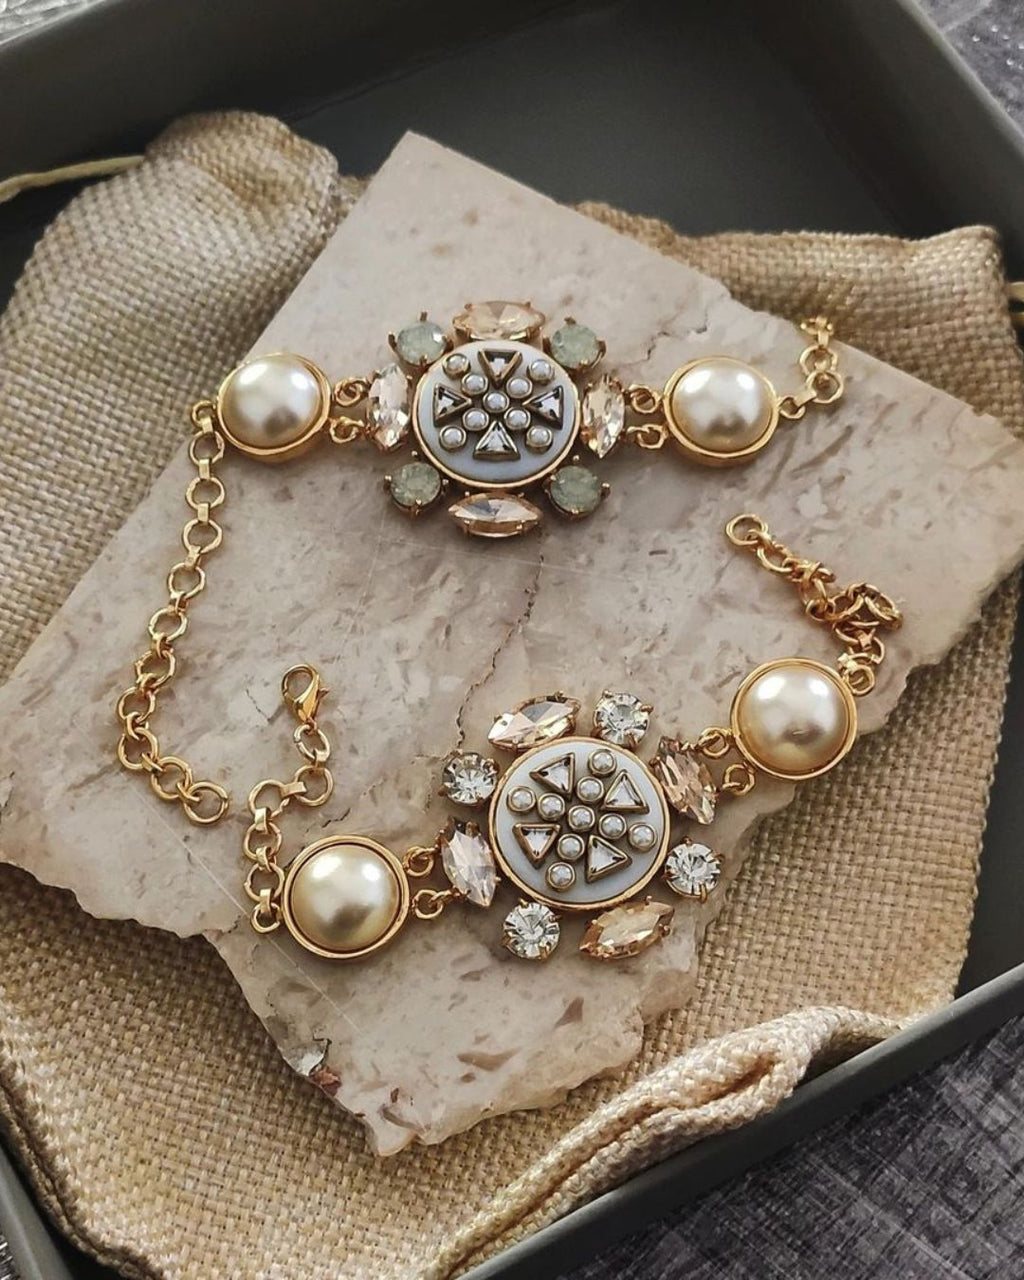 Veda Bracelet - Bracelets & Cuffs - Handcrafted Jewellery - Made in India - Dubai Jewellery, Fashion & Lifestyle - Dori